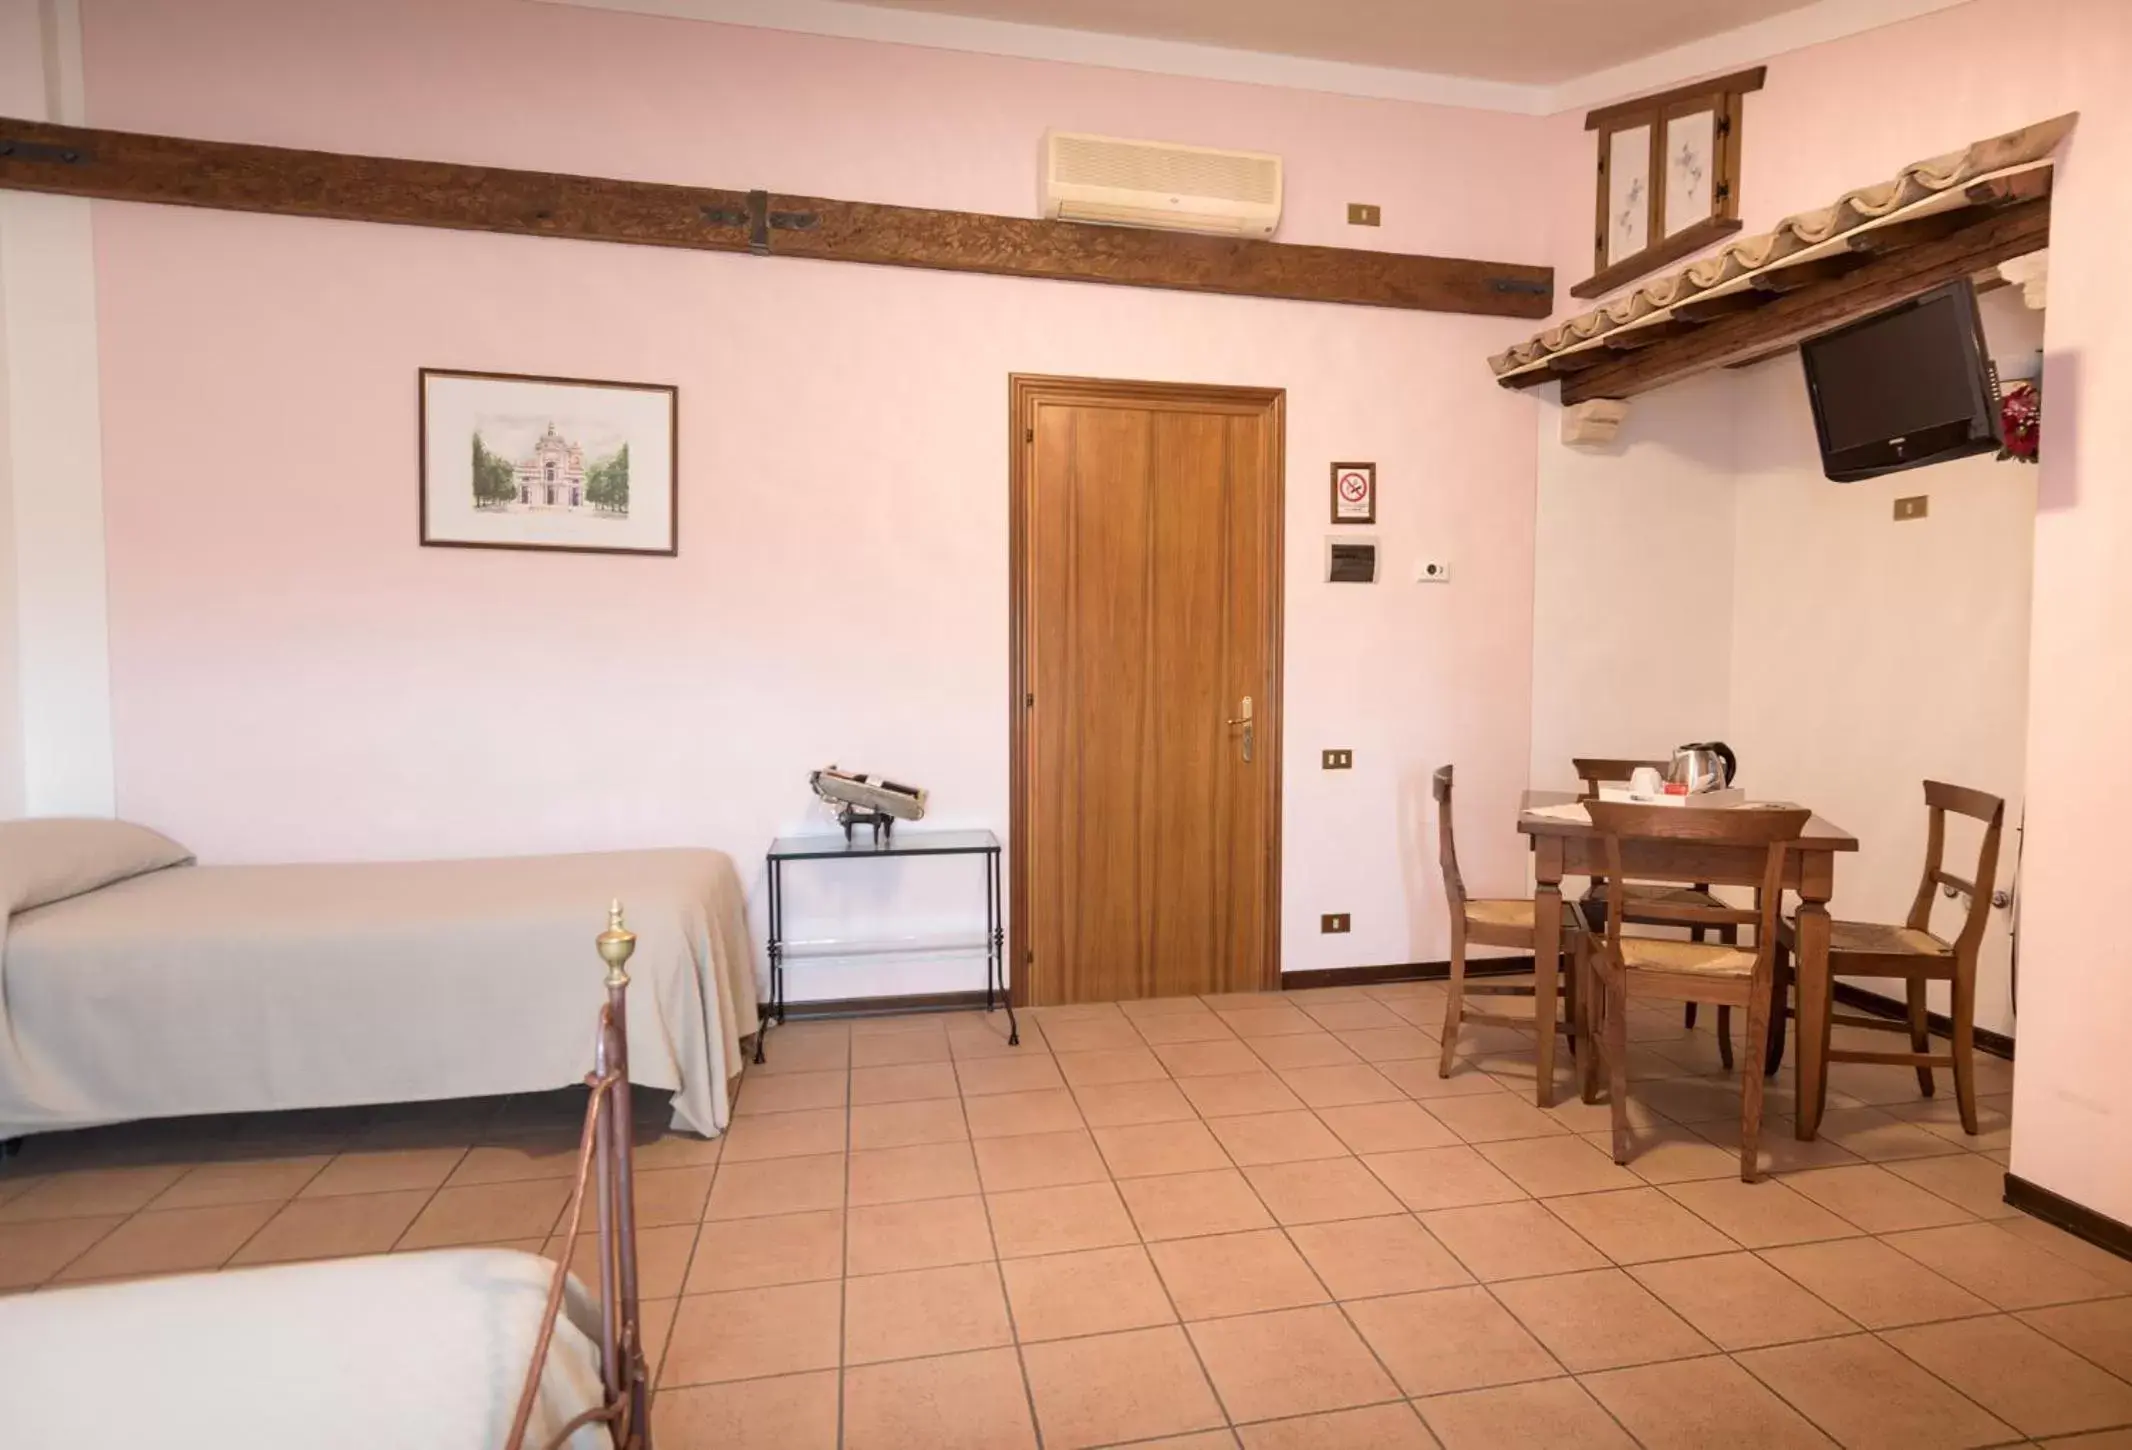 Photo of the whole room, Dining Area in La Piaggia